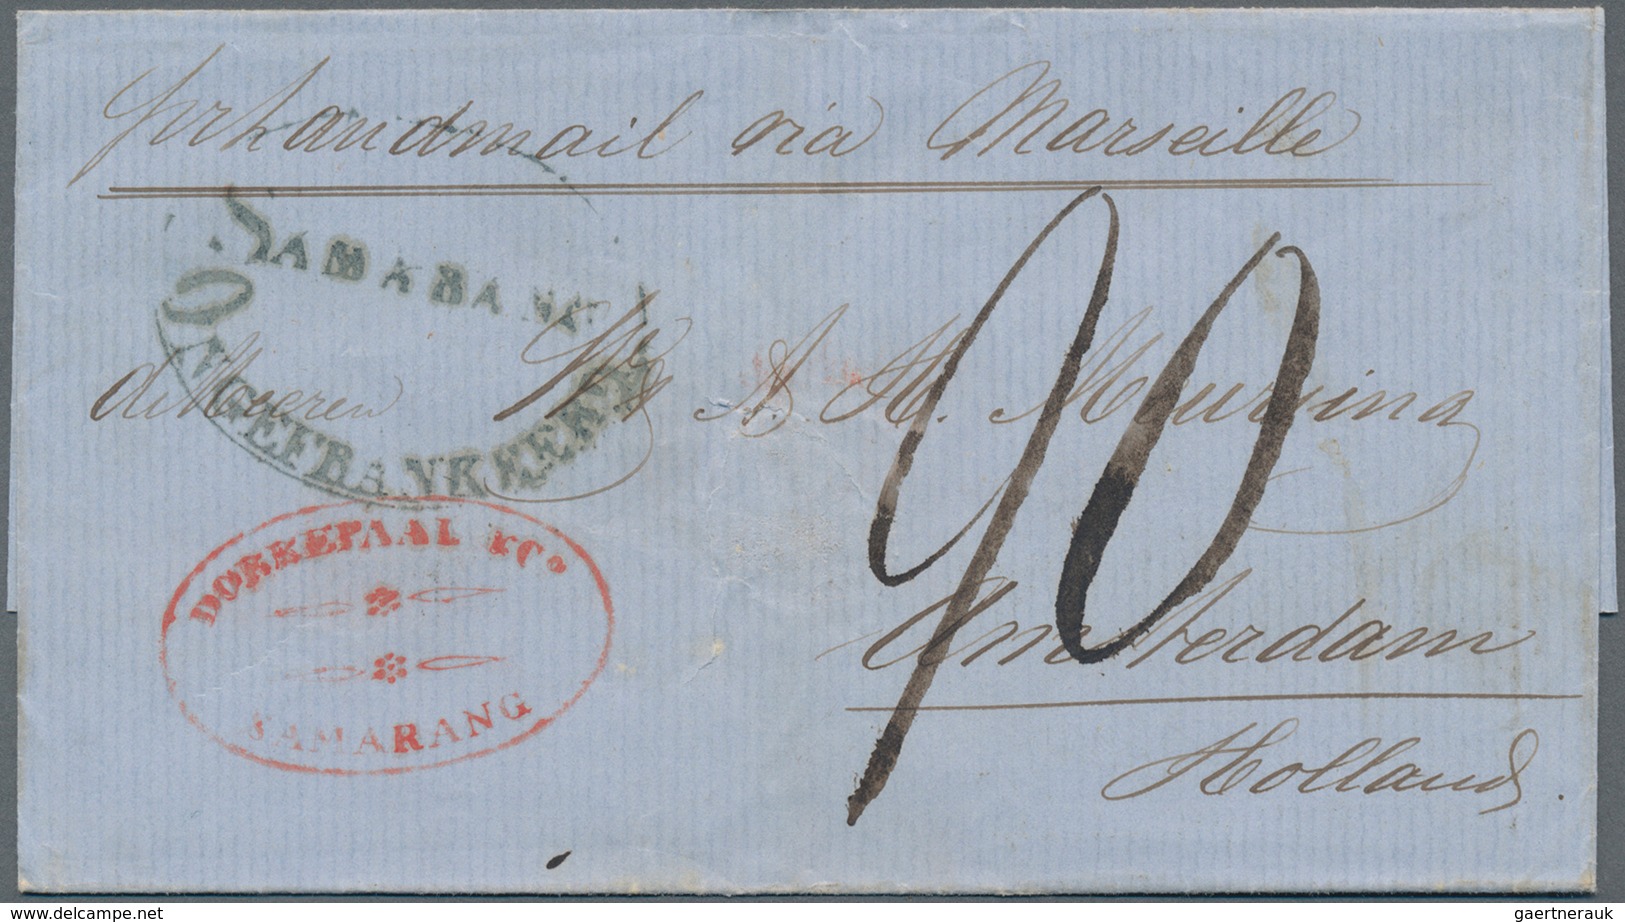 Niederländisch-Indien: 1829, Folded Letter-sheet With Boxed Handstamp SAMARANG/ONGEFRANKEERD In Blac - Netherlands Indies